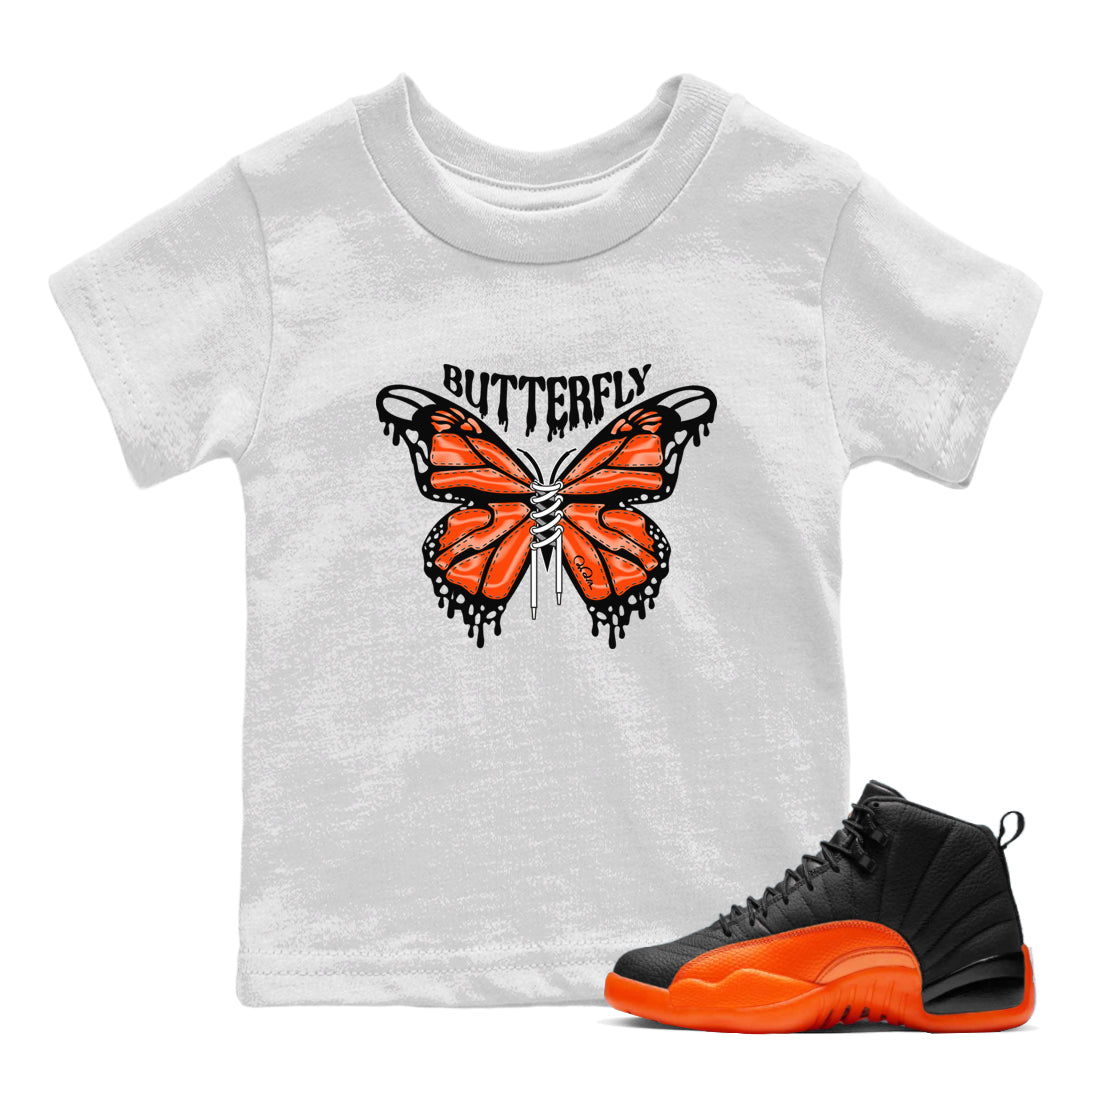 Air Jordan 12 Brilliant Orange Sneaker Match Tees Butterfly Sneaker Tees AJ12 Brilliant Orange Sneaker Release Tees Kids Shirts White 1